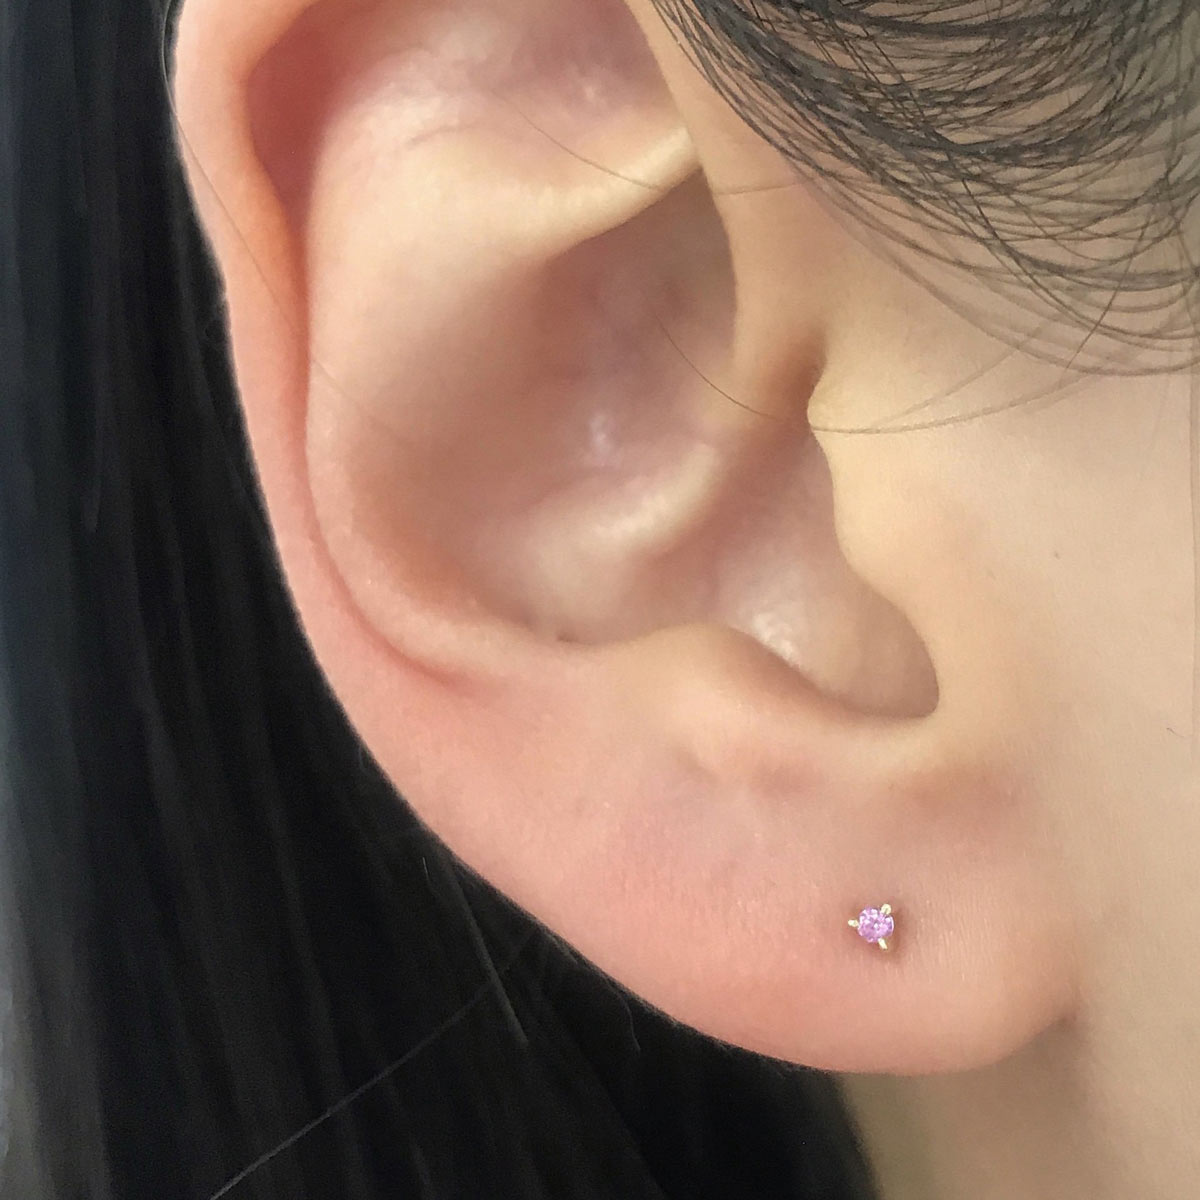 Pink Sapphire Diamond Earring Studs — J. Sampieri